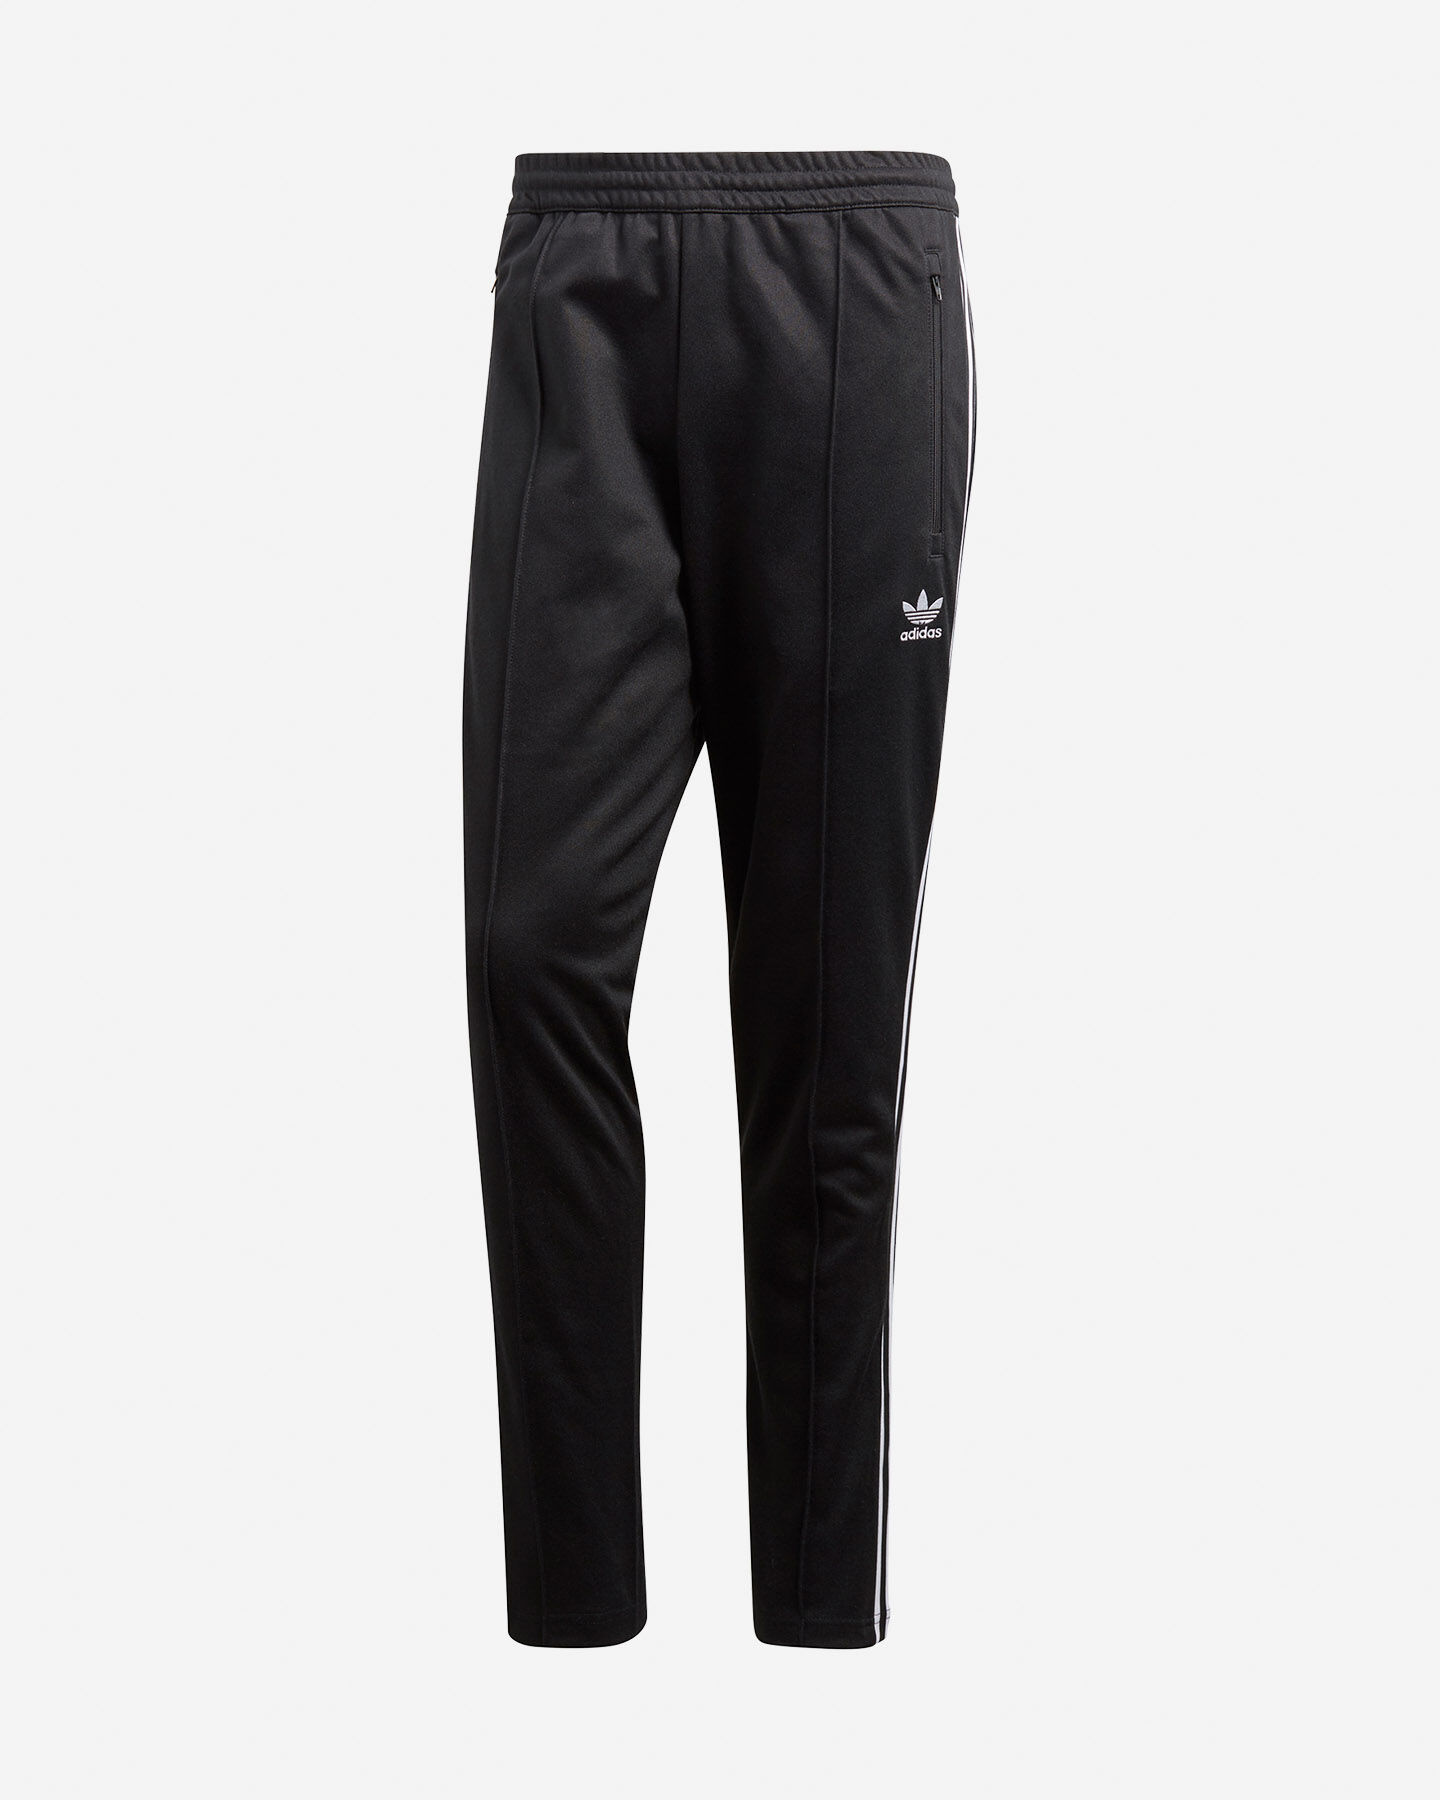  Pantalone ADIDAS FRANZ BECKENBAUER  M S4033219|BLACK|XS scatto 4